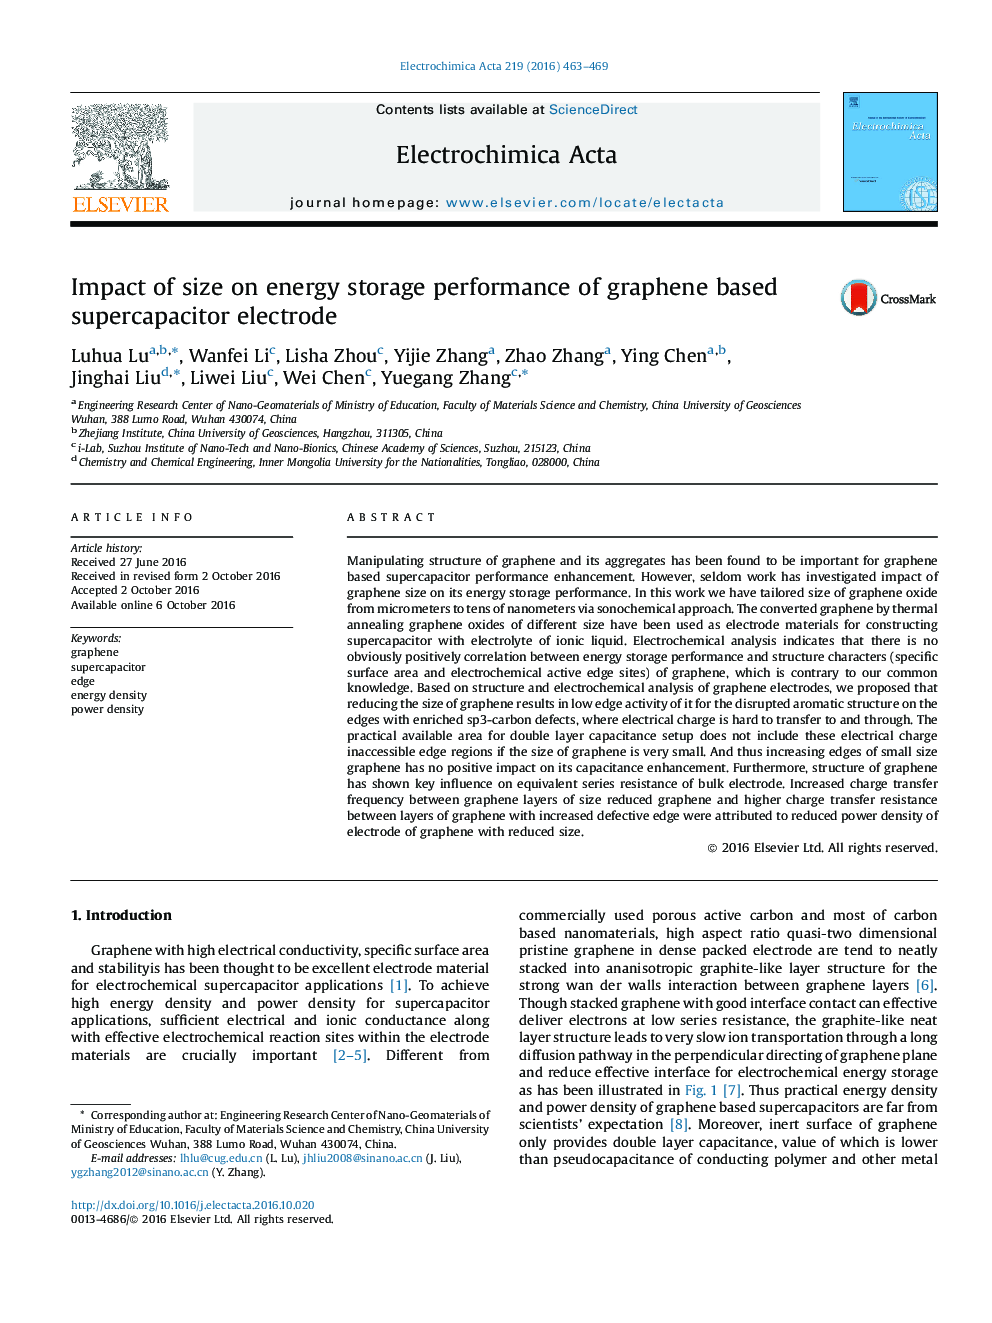 Impact of size on energy storage performance of graphene based supercapacitor electrode